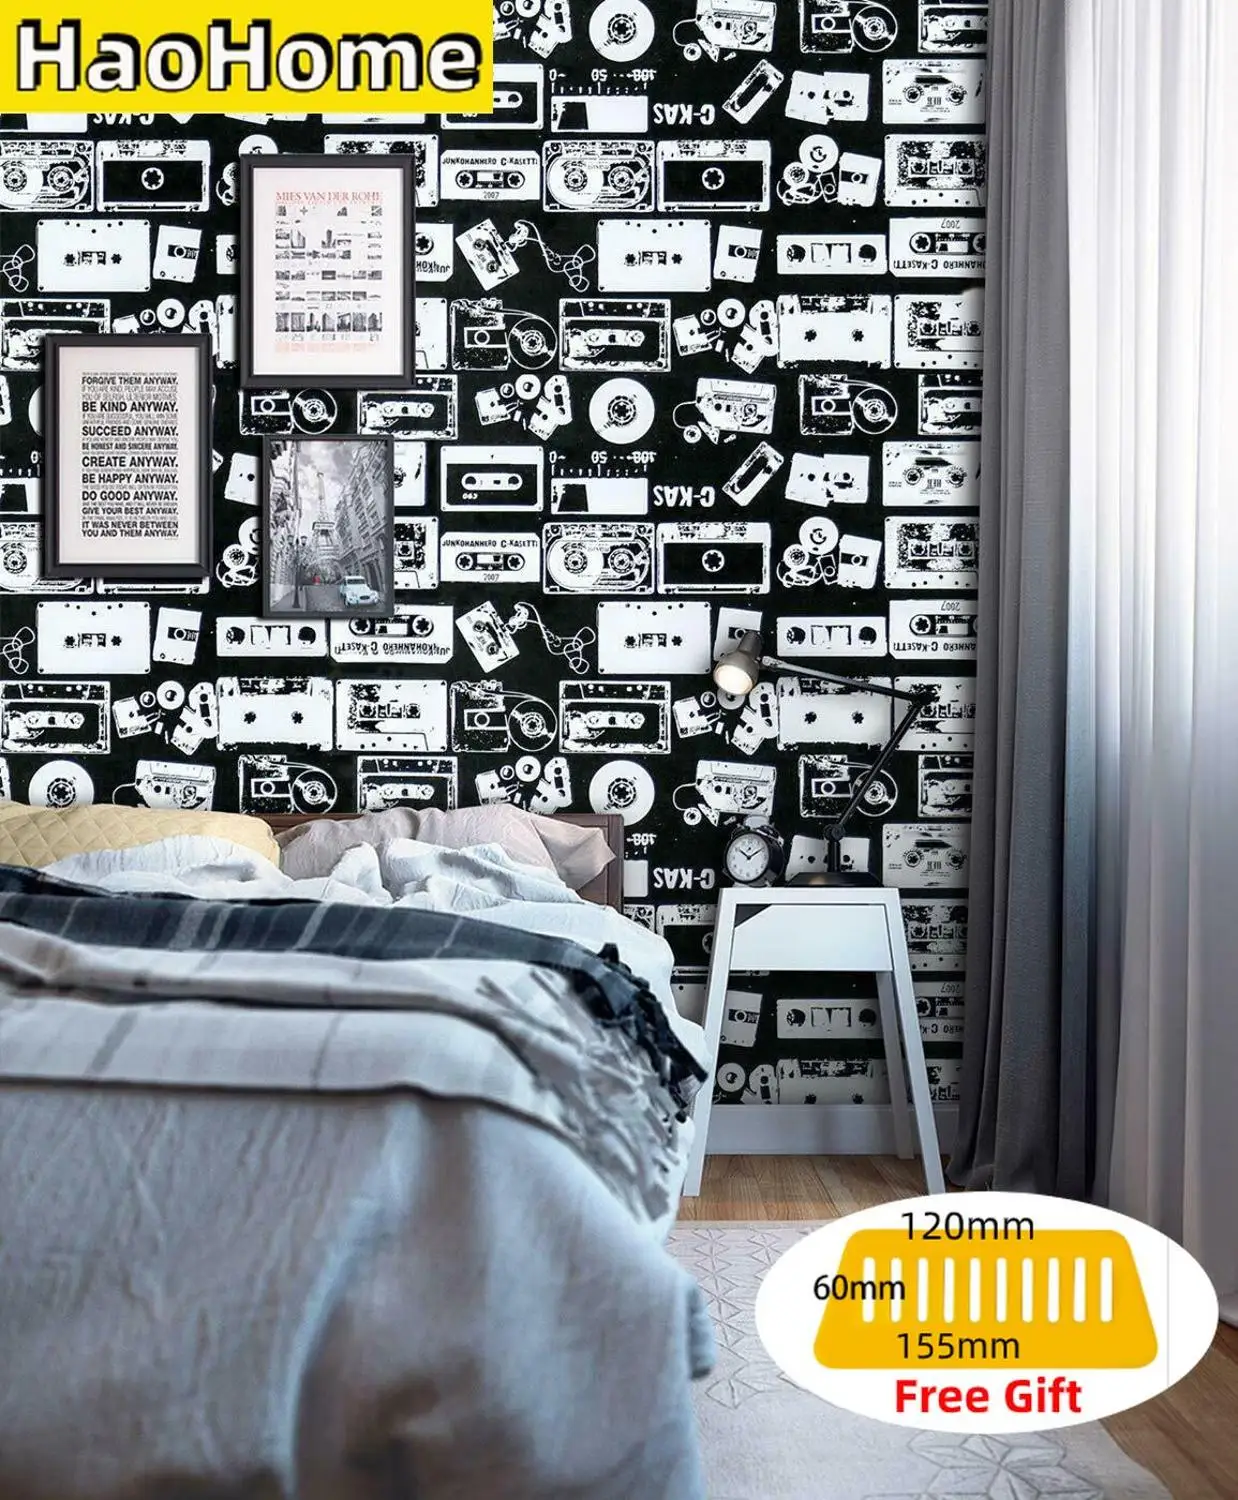 

HaoHome Waterproof Peel and Stick Wallpaper White Black Contact Paper Self Adhesive Decor Fashion Dormitory Cabinet Decor